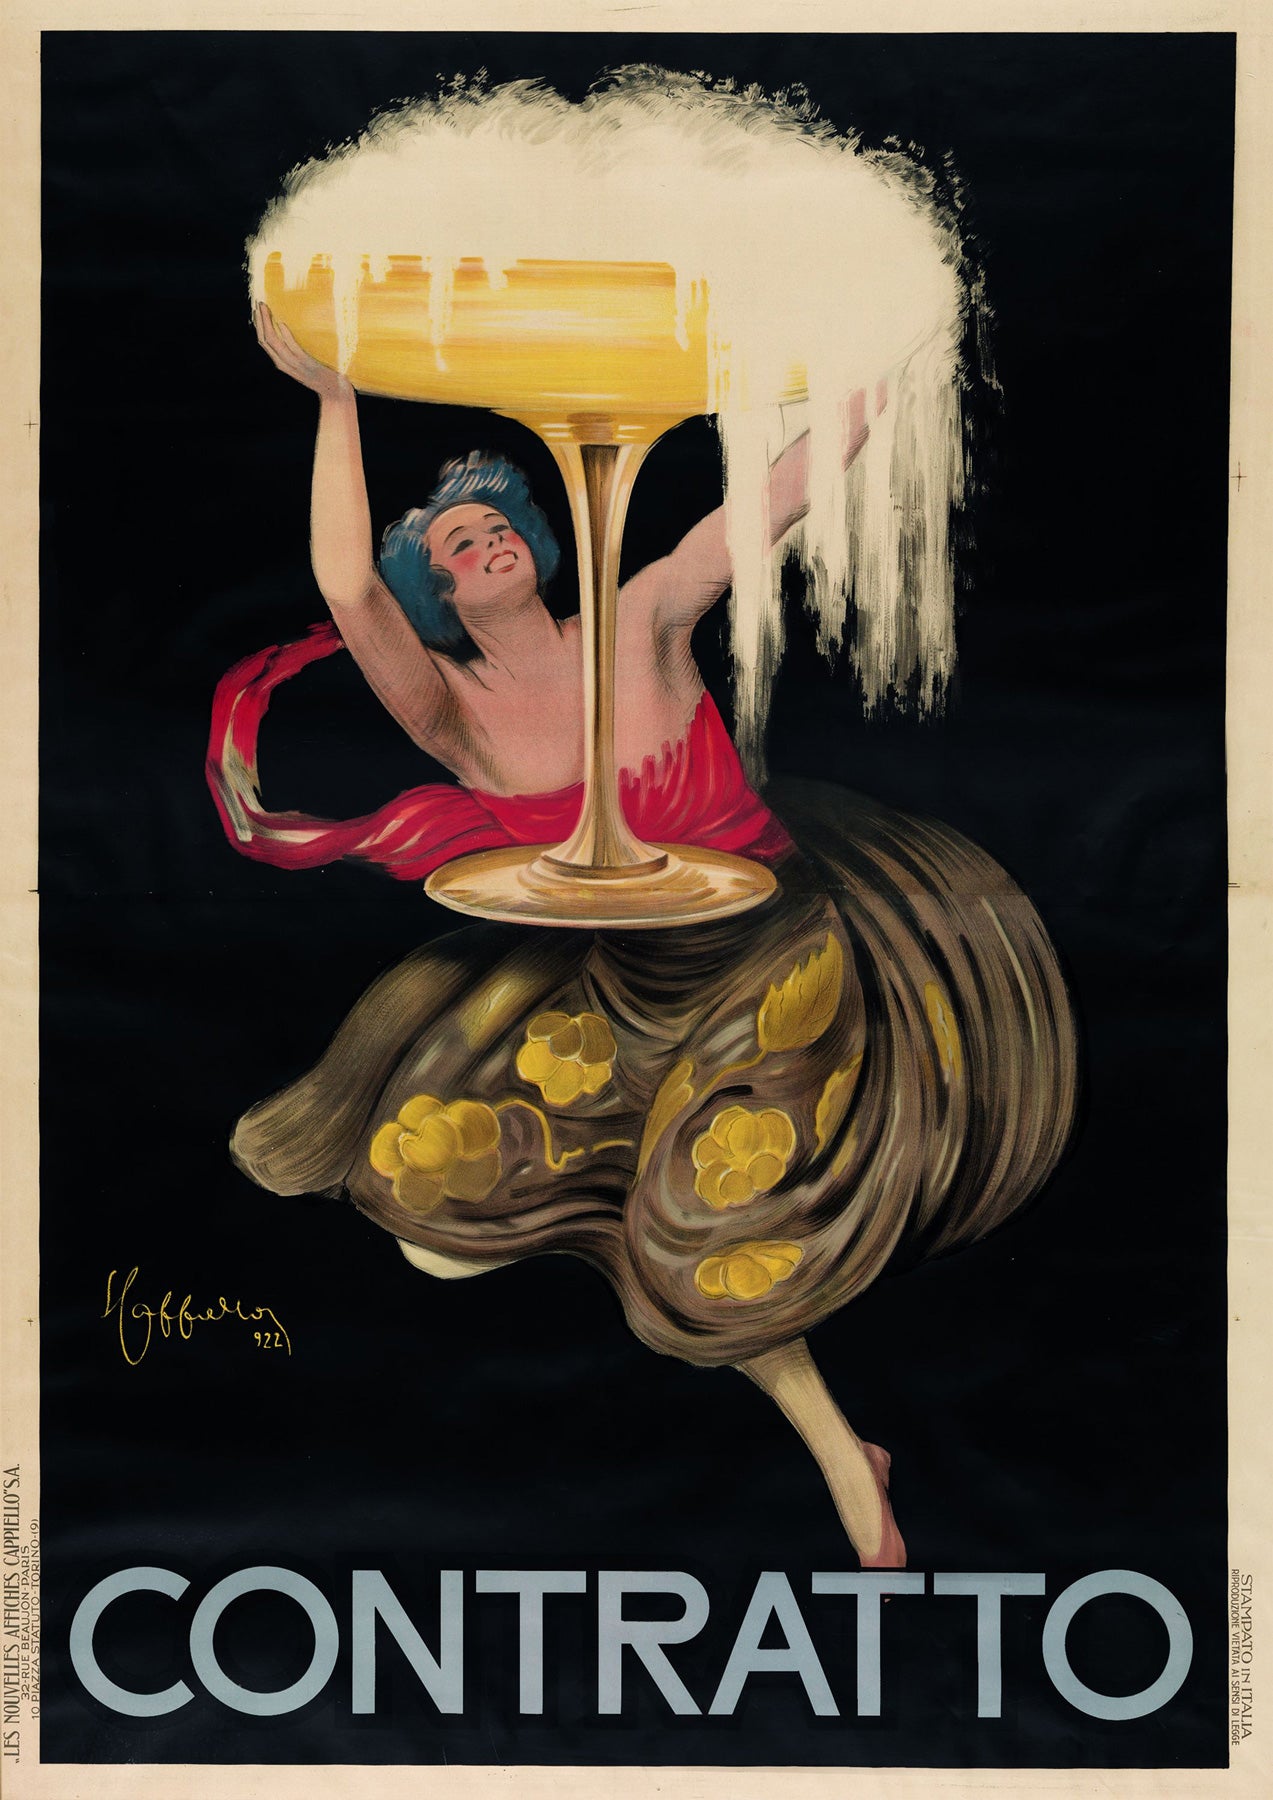 Contratto 1922 Vintage French Alcohol Advertising Poster, Leonetto Cappiello